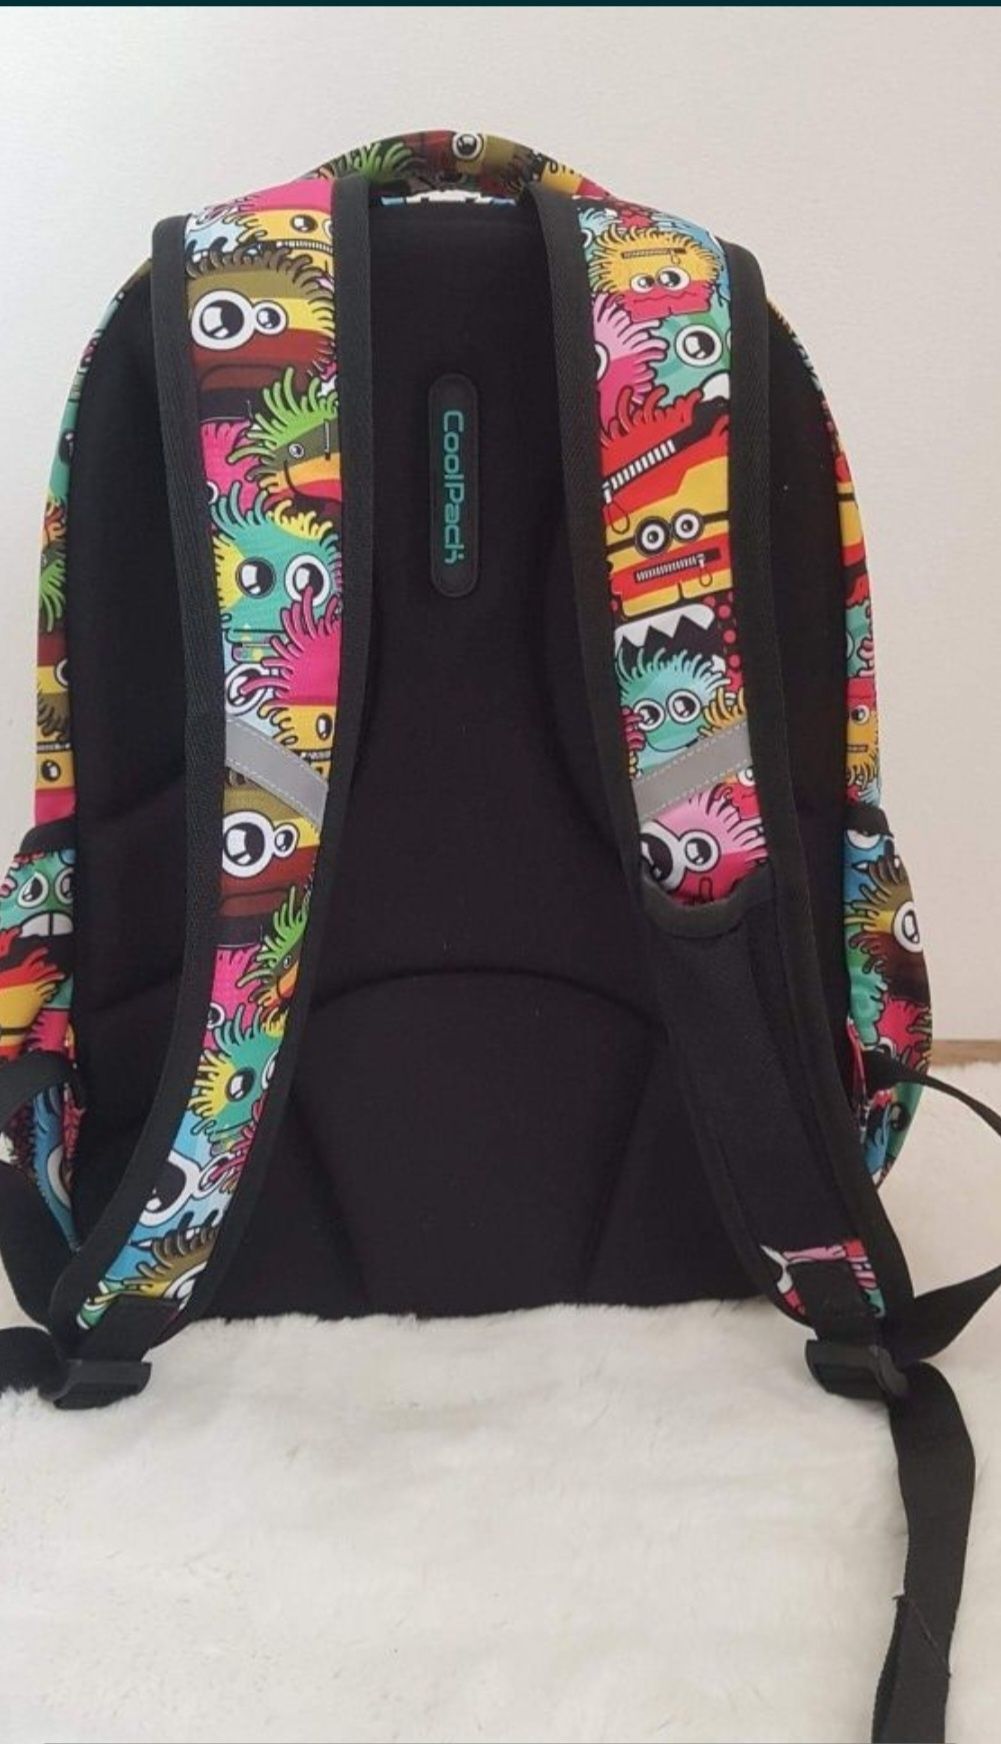 Plecak CoolPach dla dziecka